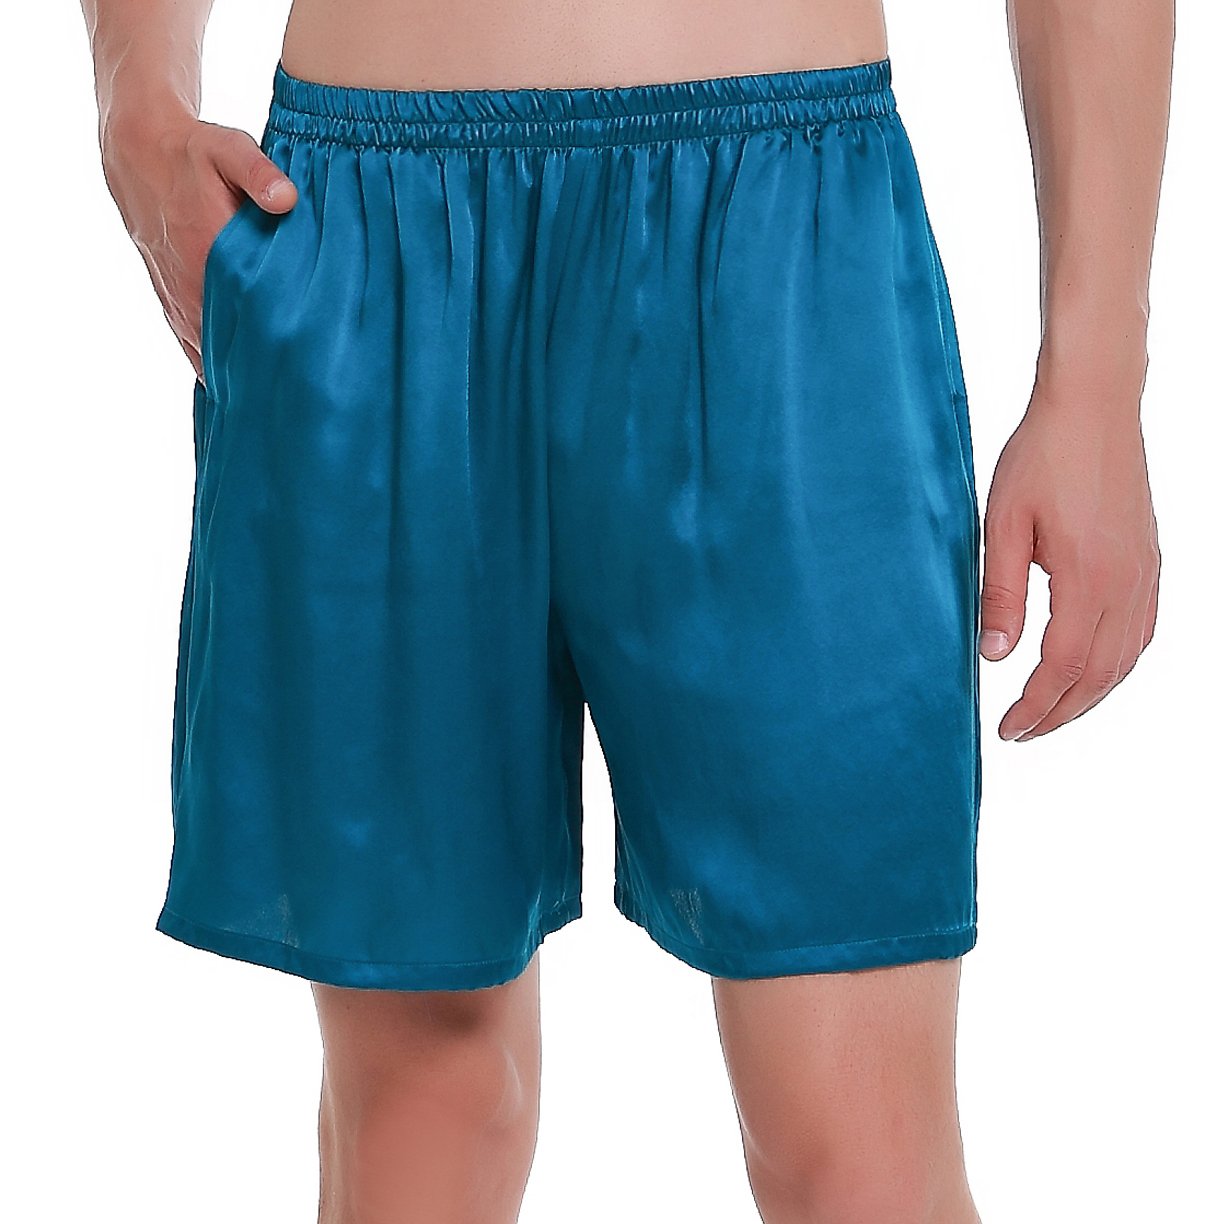 Lepton Men's Silk Shorts